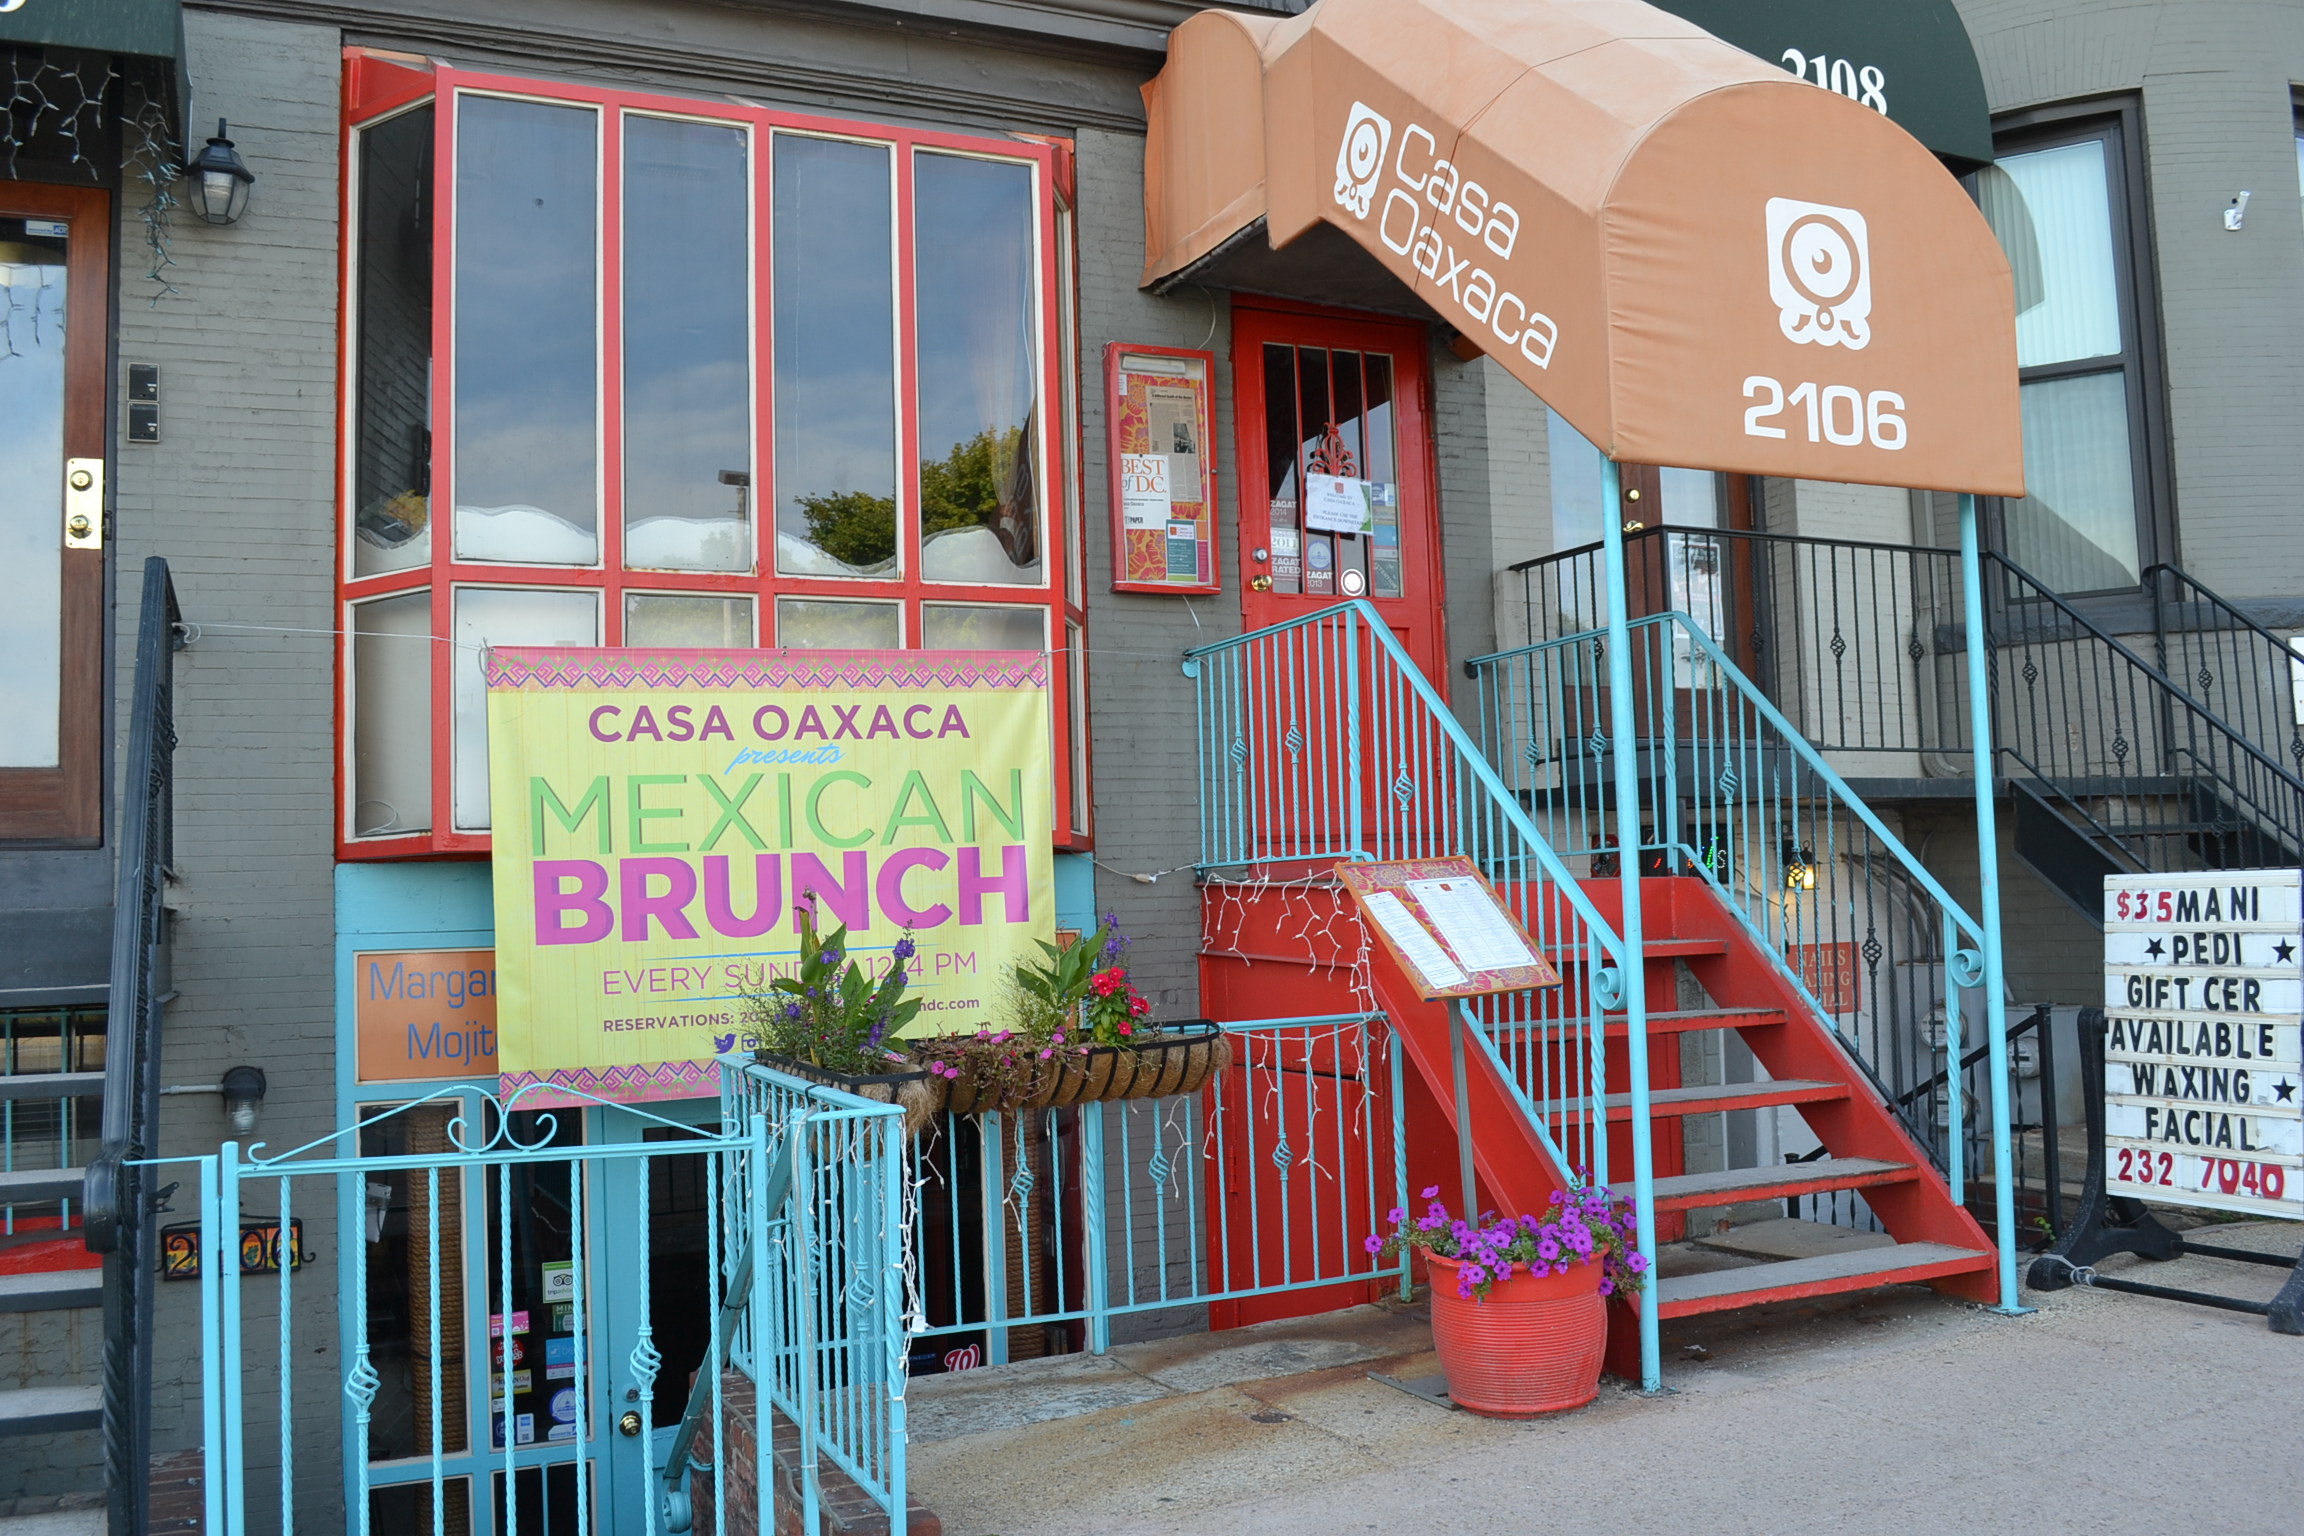 Casa Oaxaca in Adams Morgan closed for good on Friday. (Photo: Franky J)